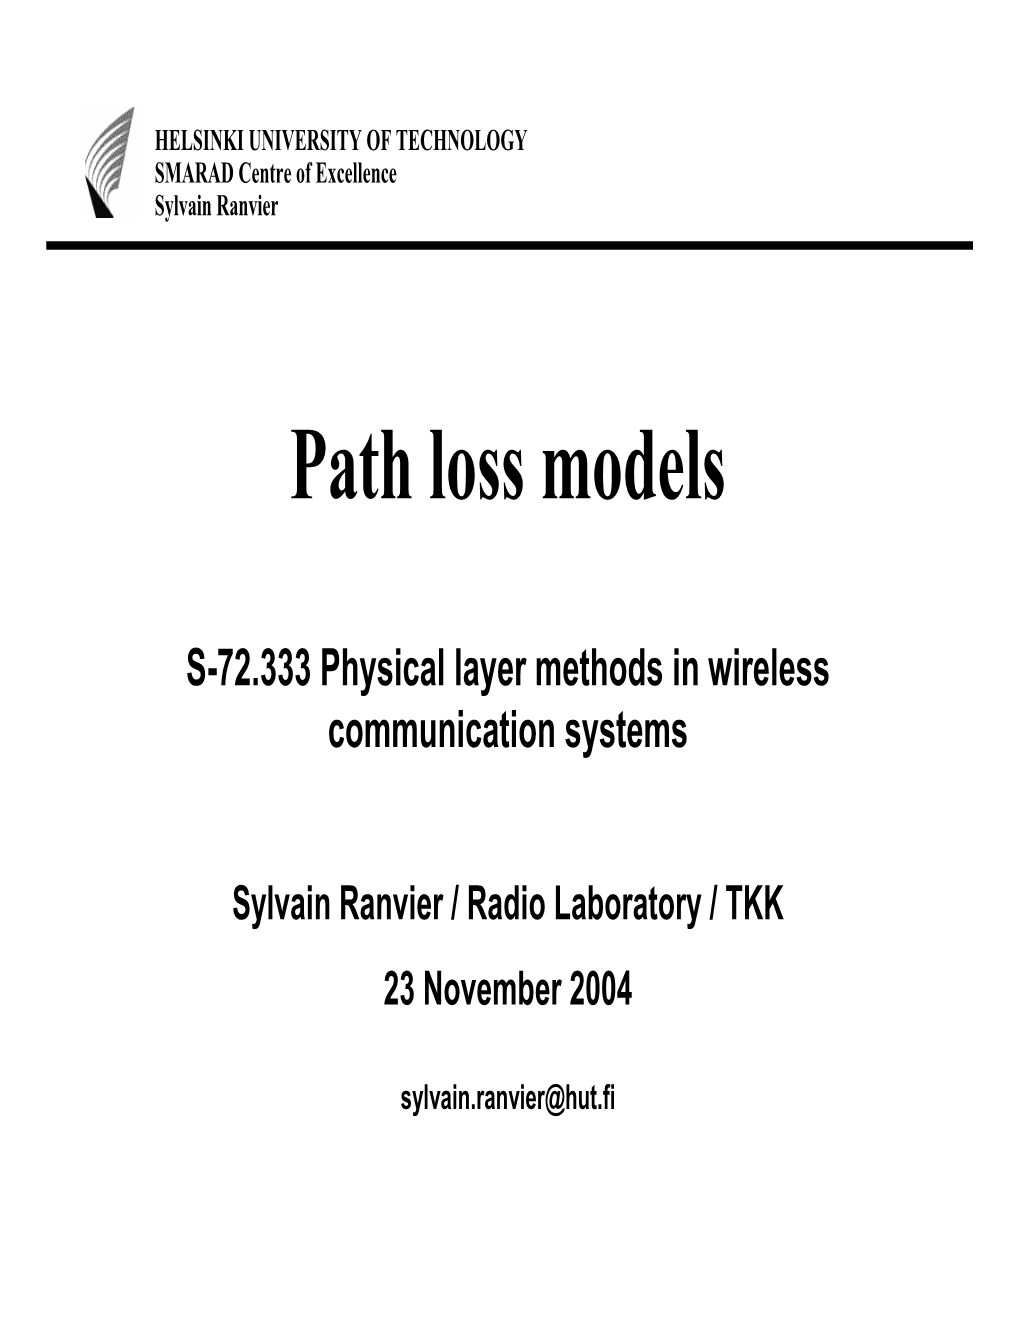 Path Loss Models